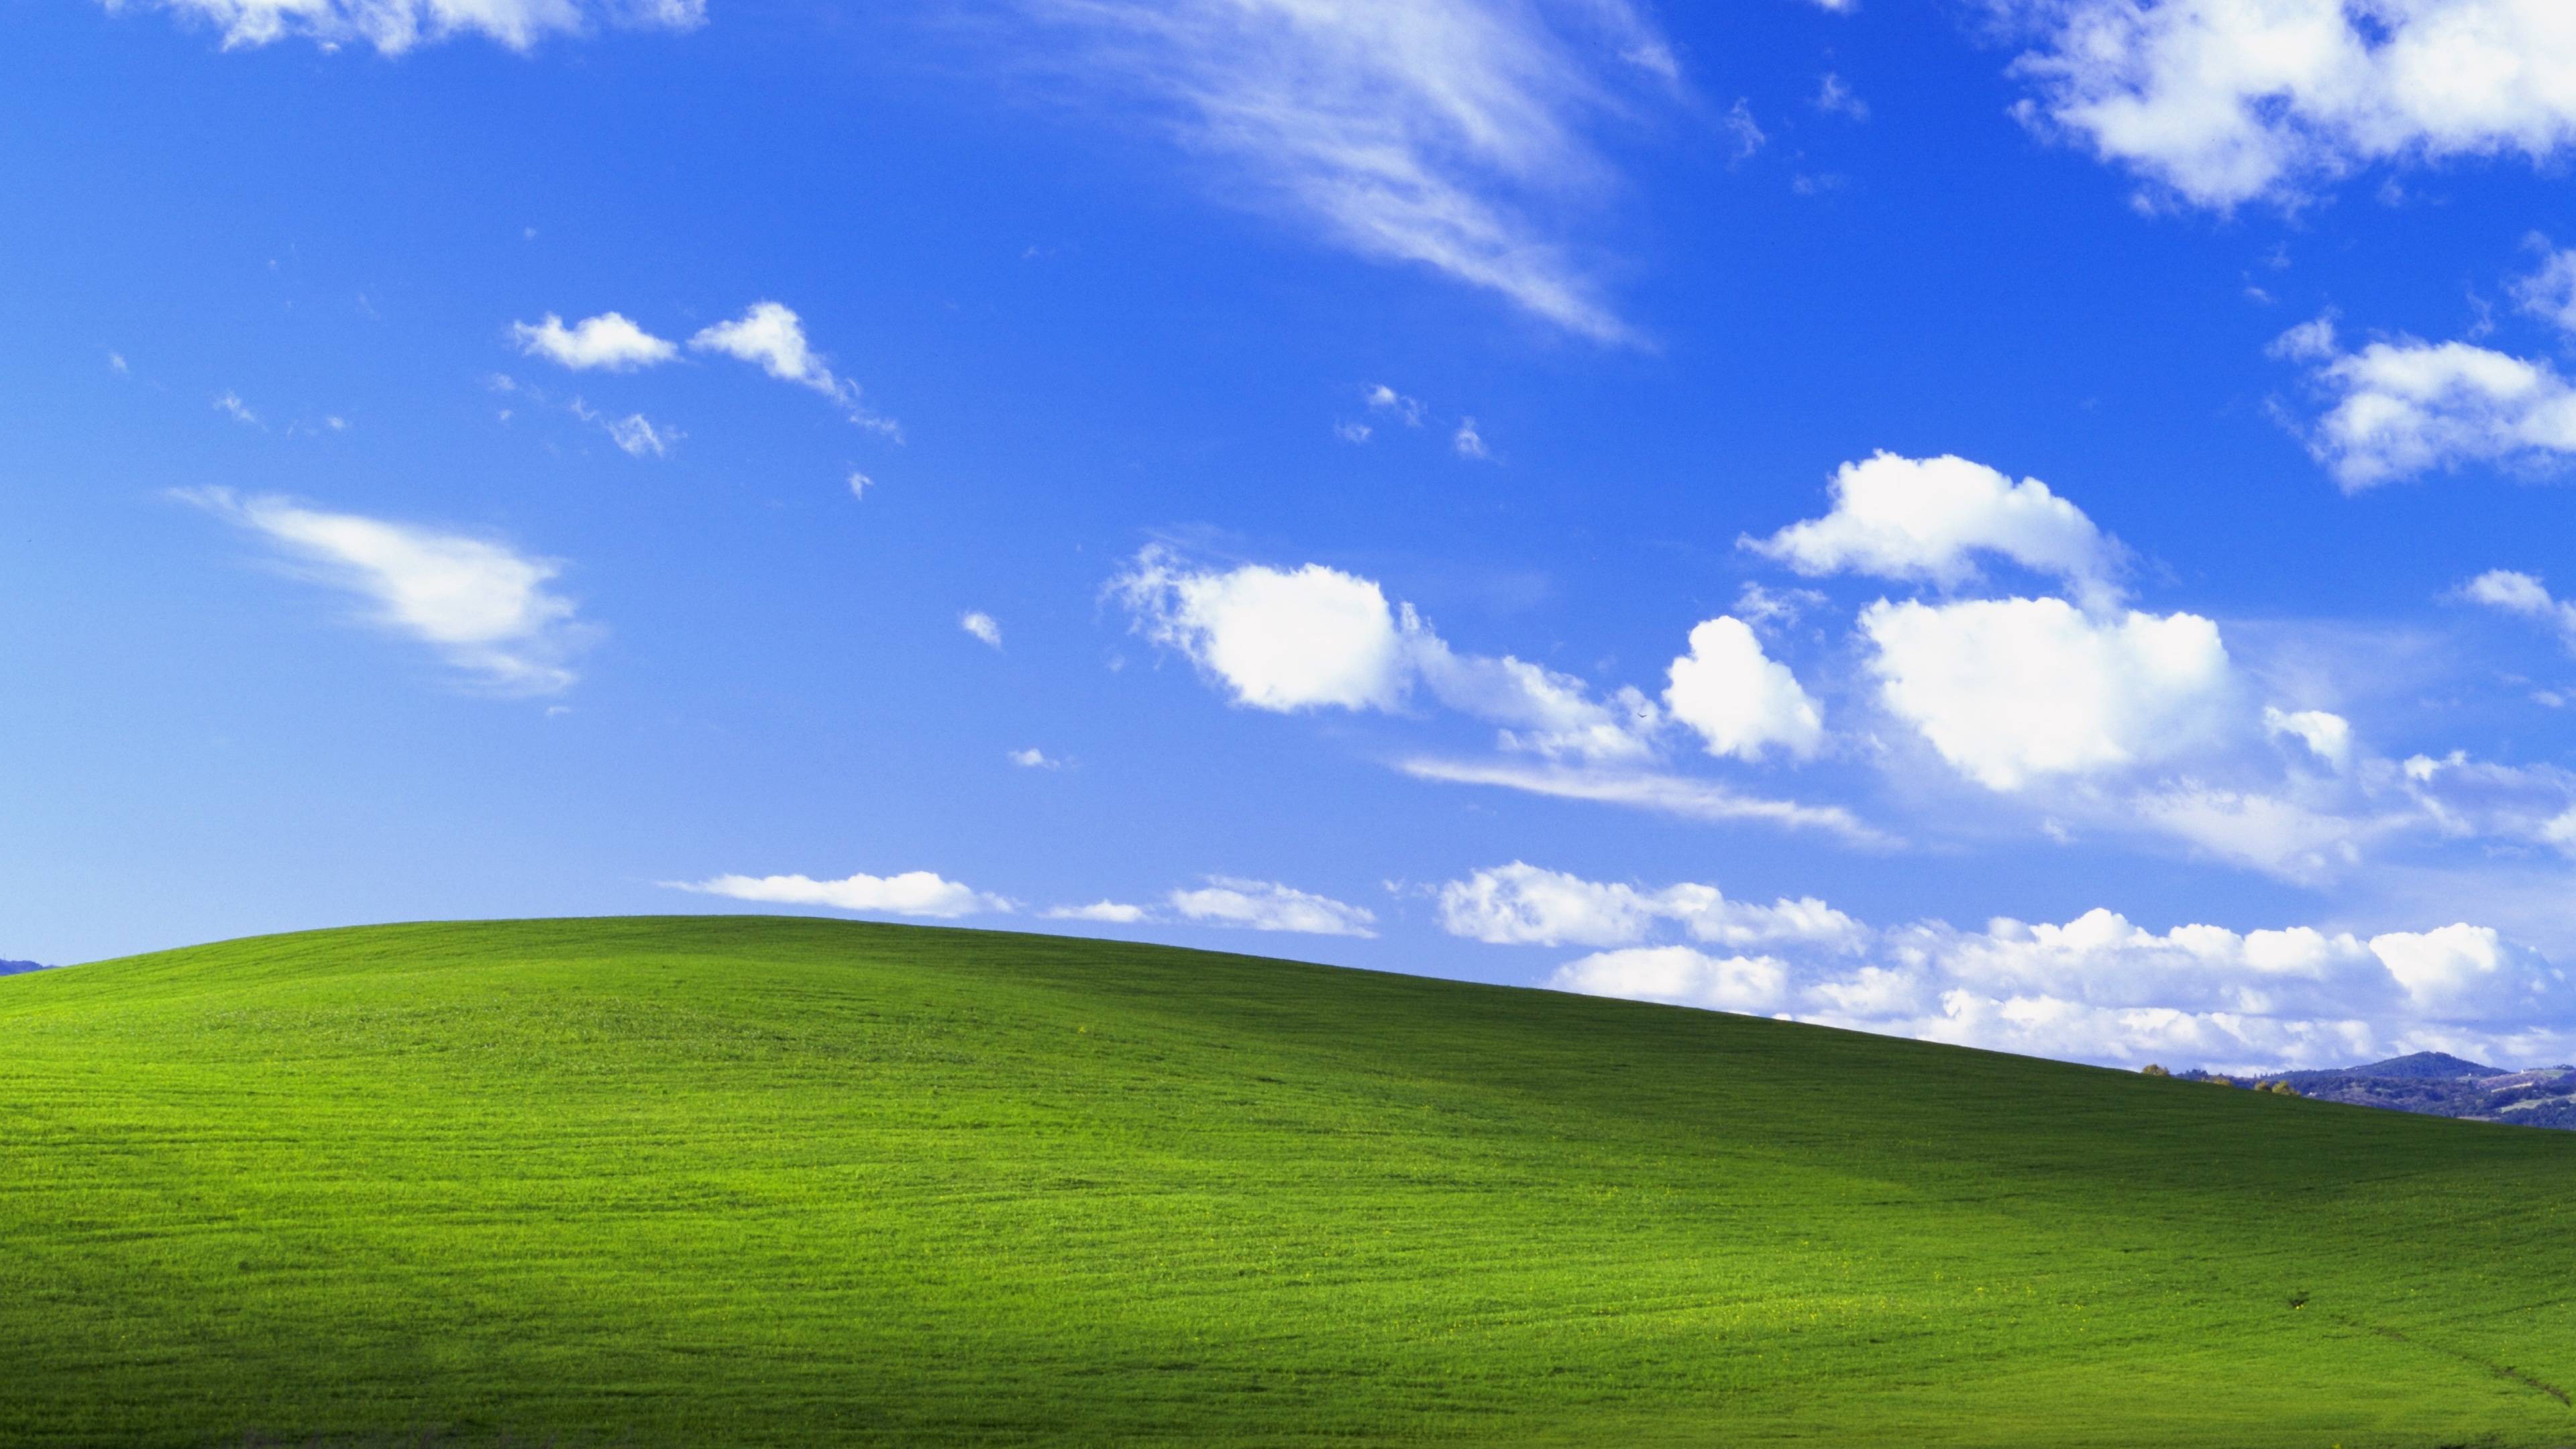 4k resolution wallpaper,sky,grassland,green,natural landscape,blue